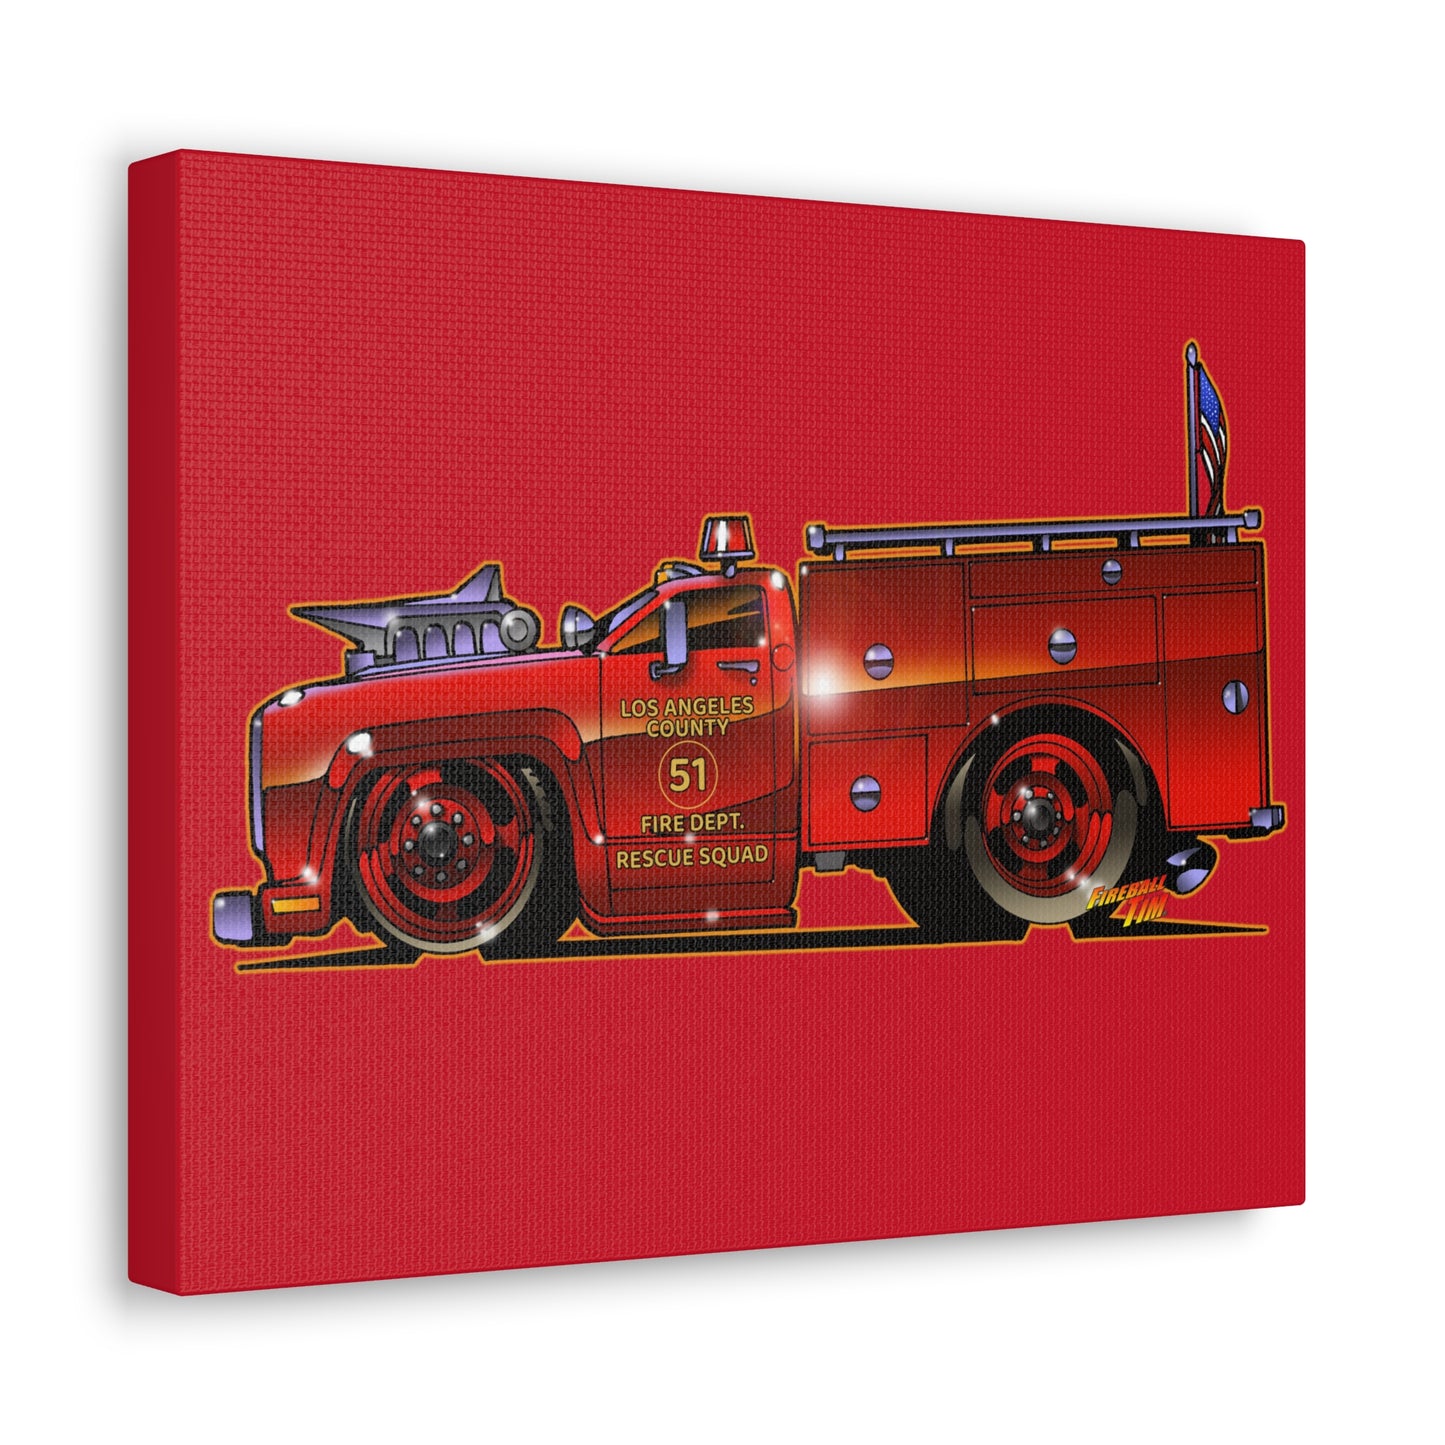 EMERGENCY SQUAD 51 Paramedic Truck Canvas Gallery Art Print 11x14